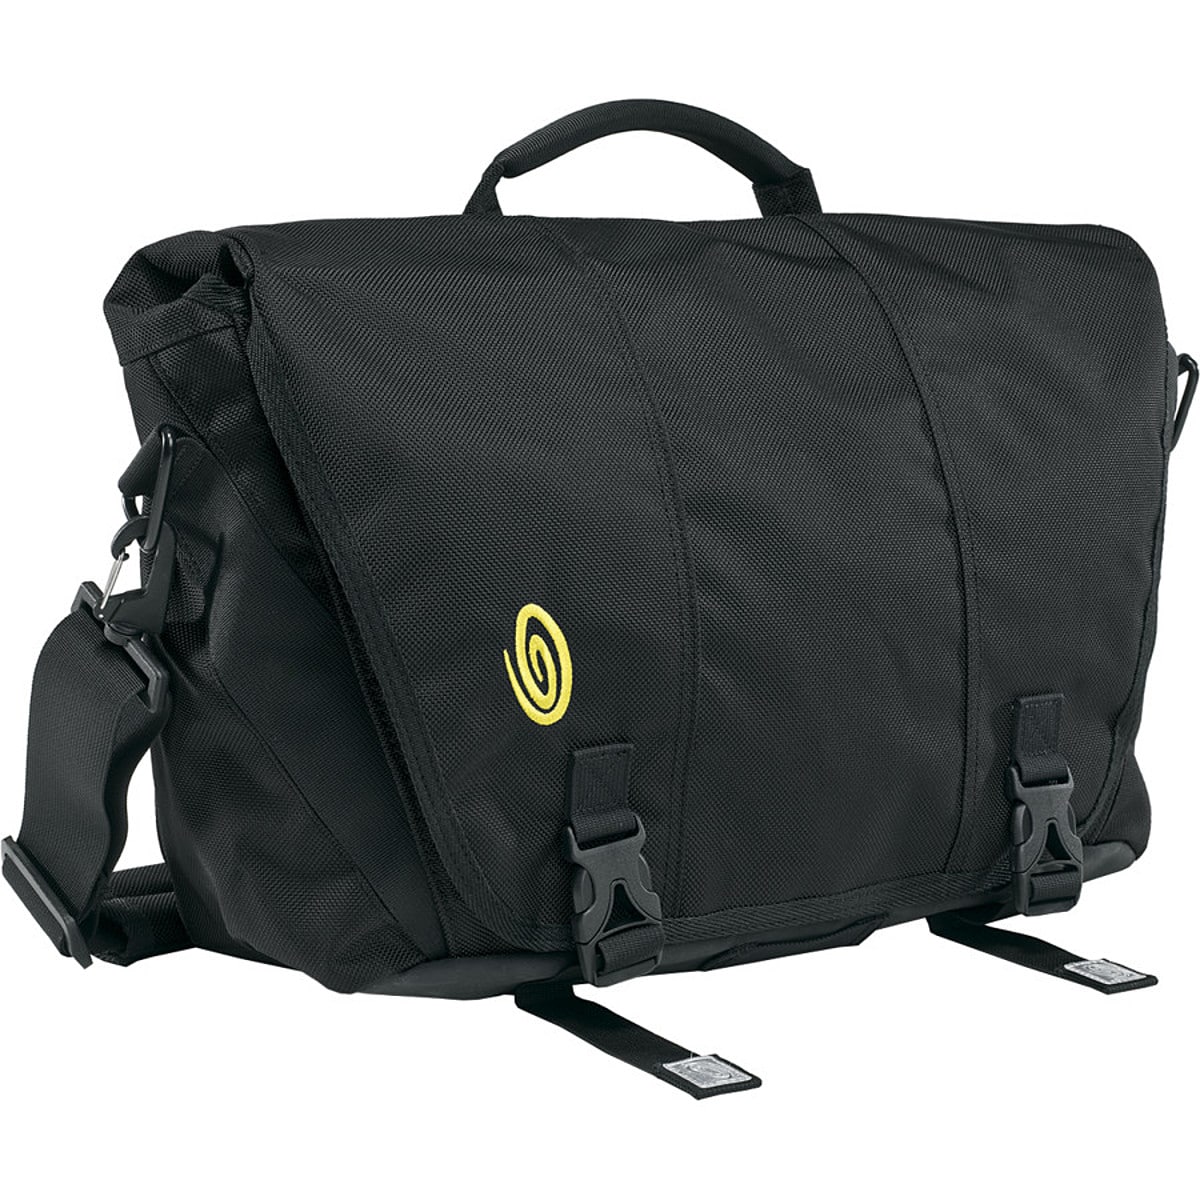 Timbuk2 Commute 2.0 Laptop Bag - Accessories